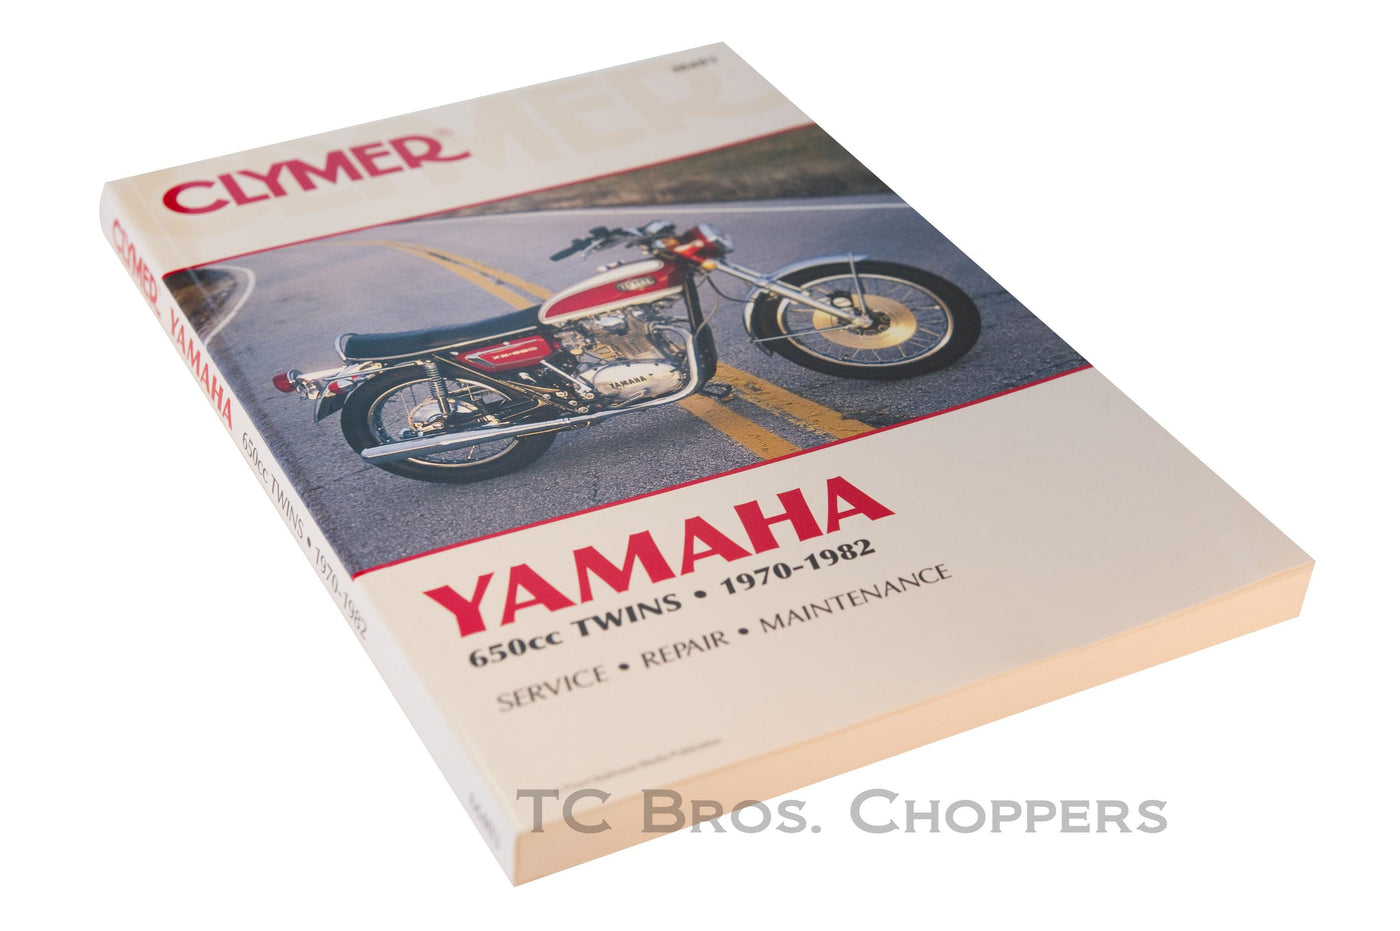 Clymer Manual for Yamaha 650cc Twins 1970-1982 XS650, TX650, XS1, XS2 motorcycles.